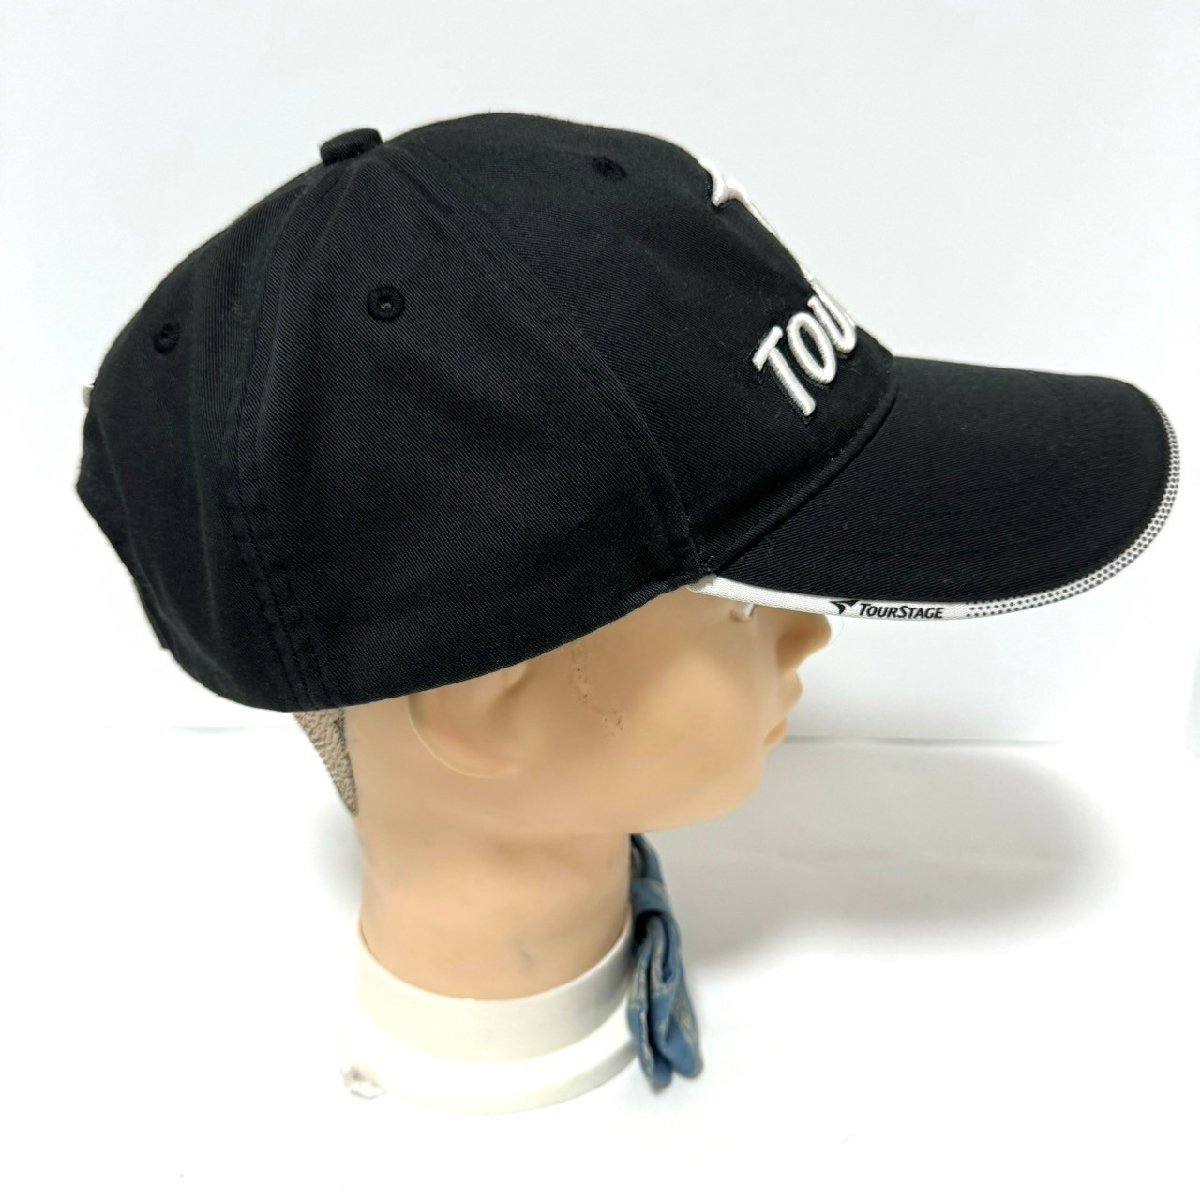 (^w^)b TOURSTAGE BRIDGESTONE Tour Stage Bridgestone колпак шляпа Logo вышивка GOLF Golf спорт чёрный LL 60~63.C0808EE